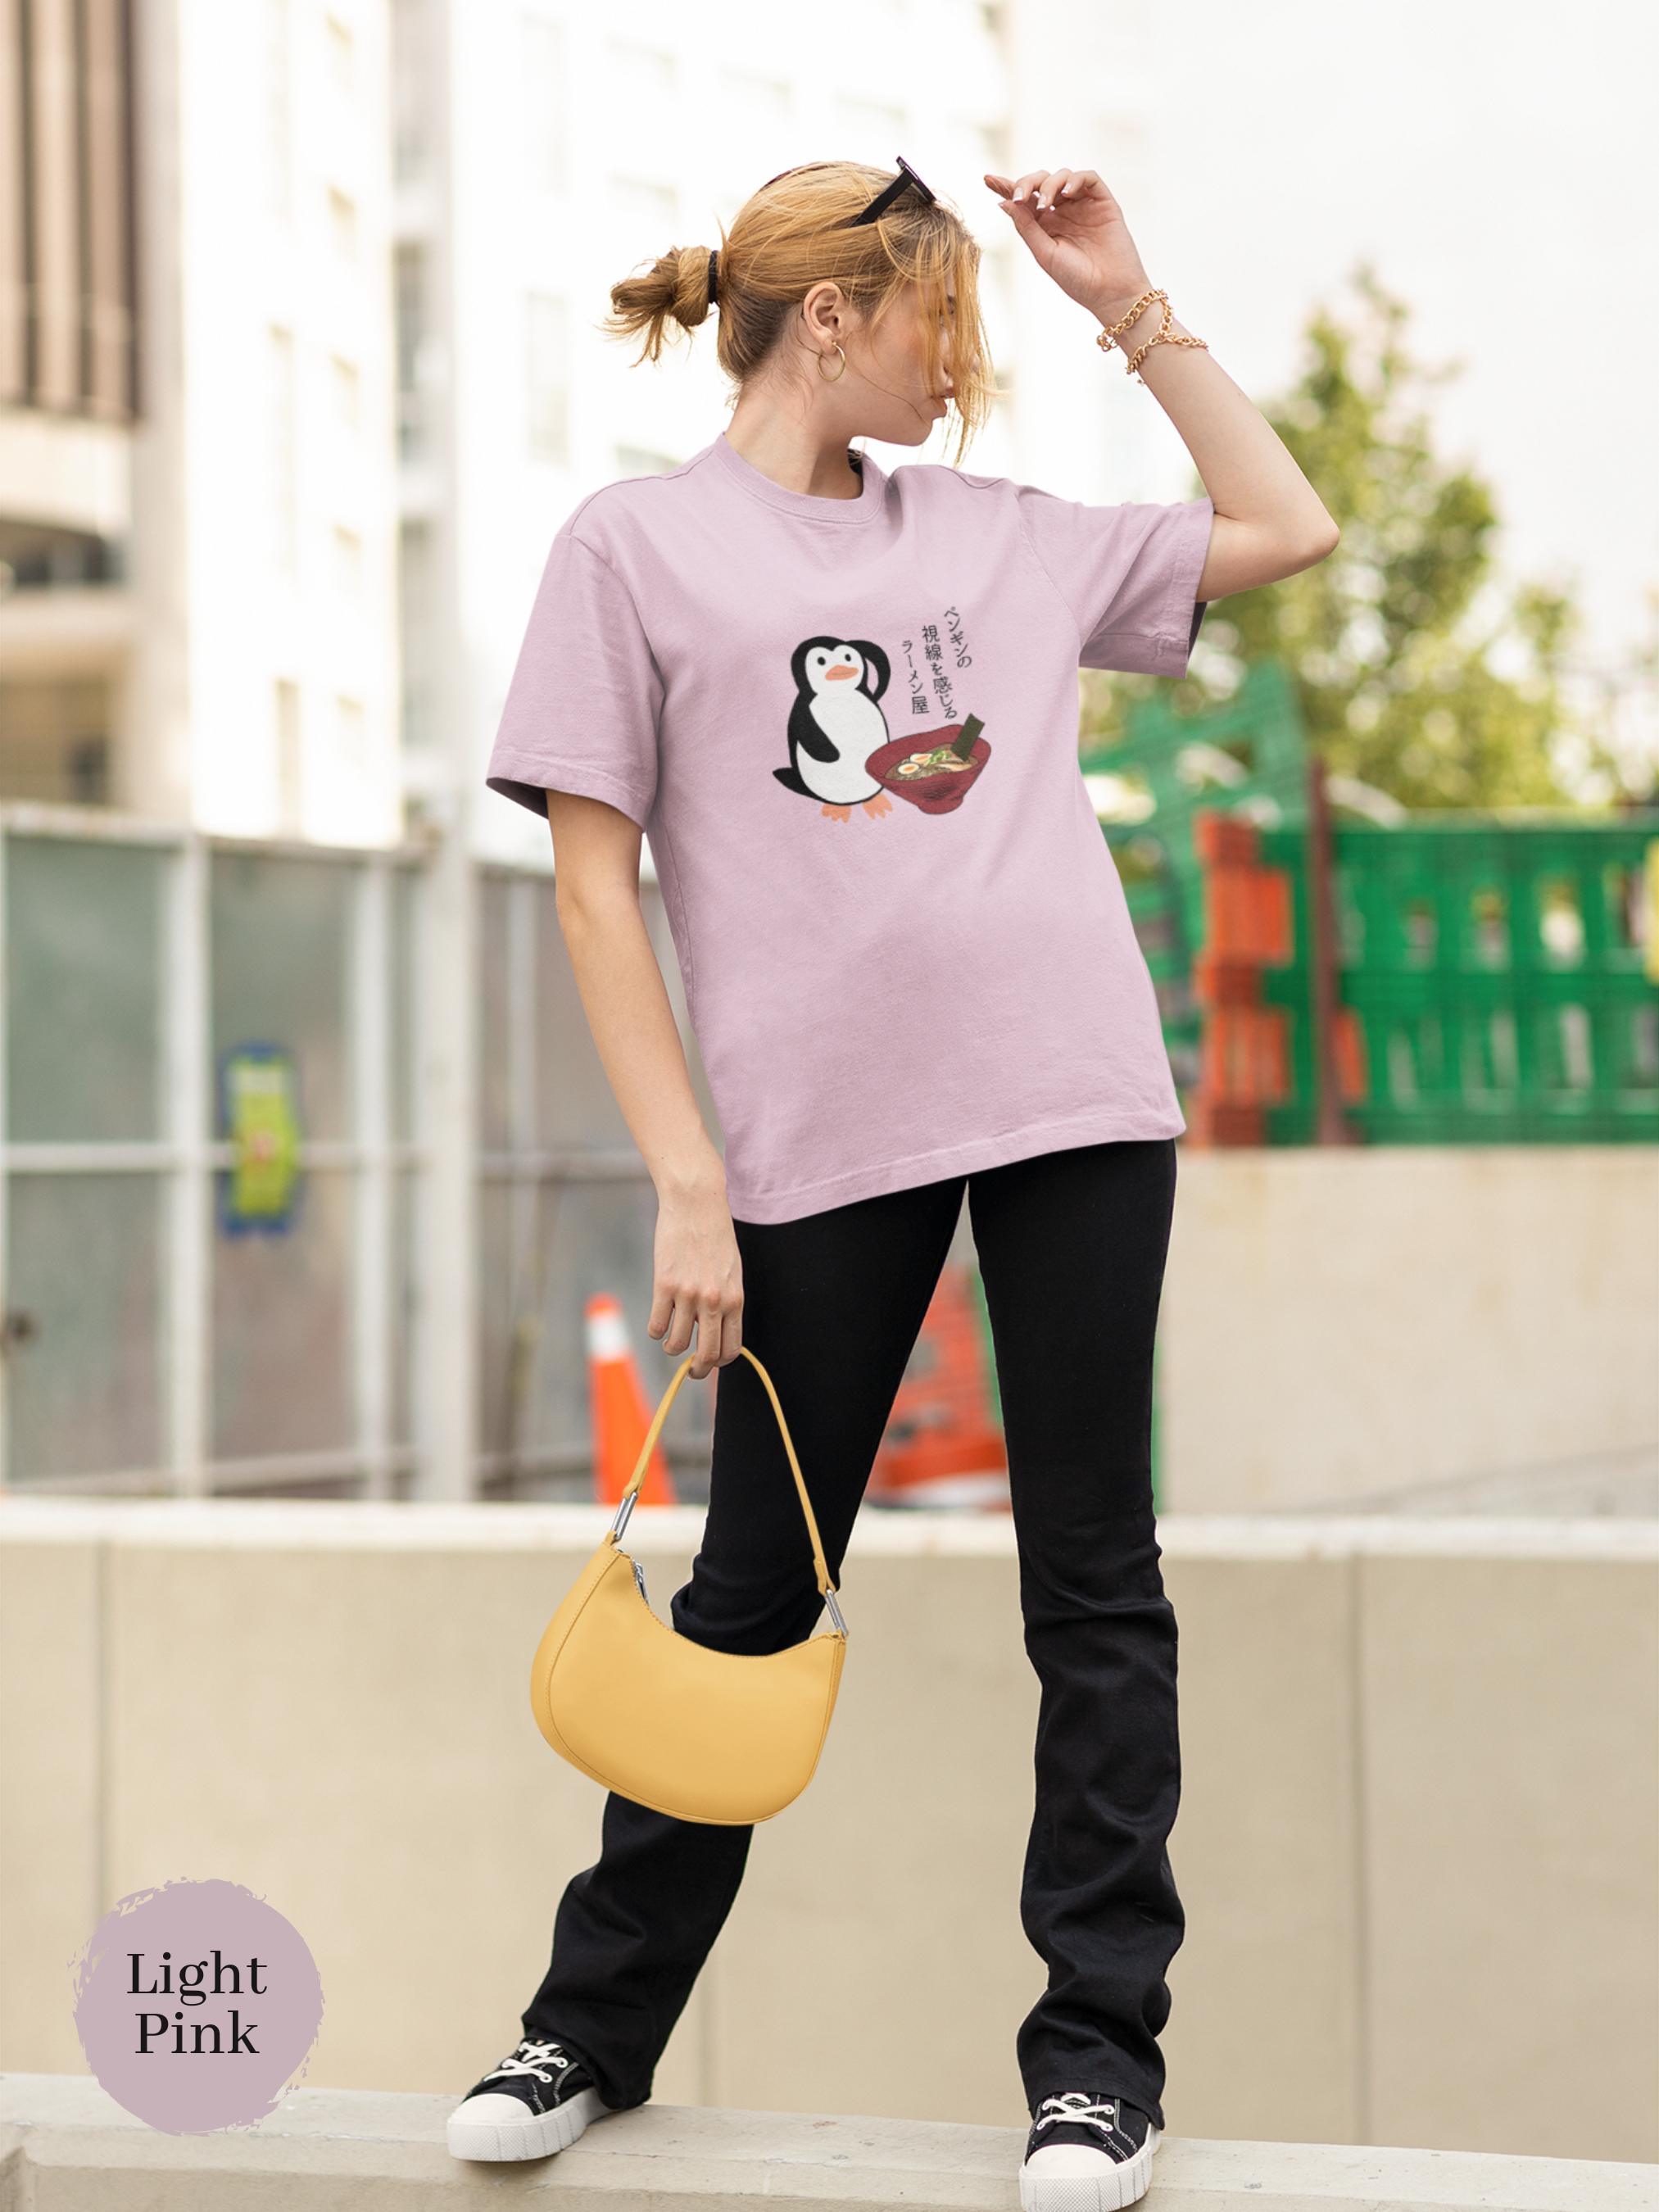 Ramen T-shirt: Penguin's Gaze, Haiku-inspired Japanese Foodie Shirt with Ramen Art